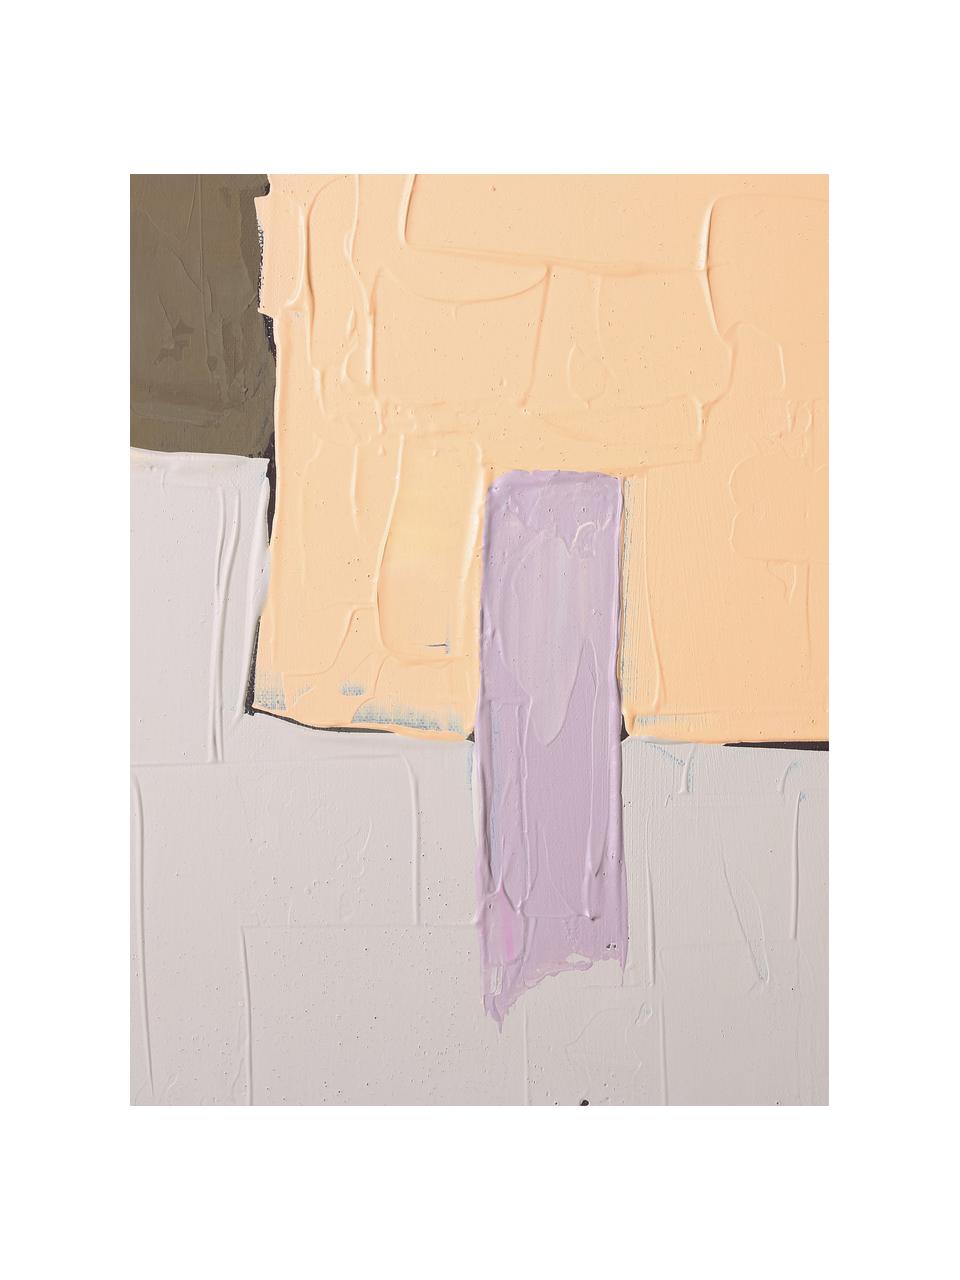 Ingelijste canvasdoek Olivia, Frame: essenhout, Bruin, roze, crèmekleurig, B 100 x H 120 cm